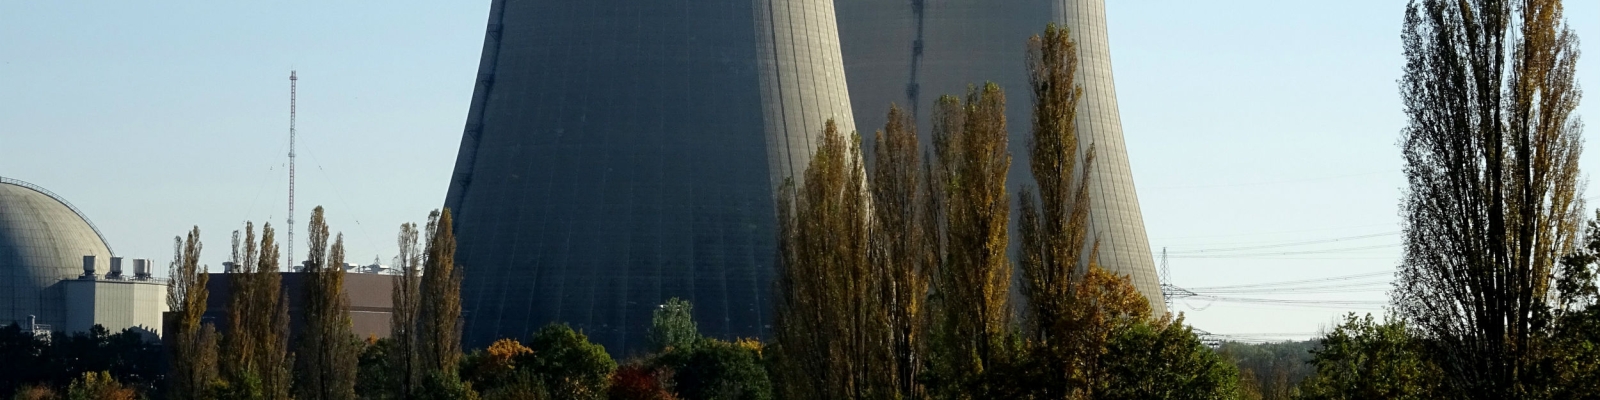 Kerncentrale Zeeland